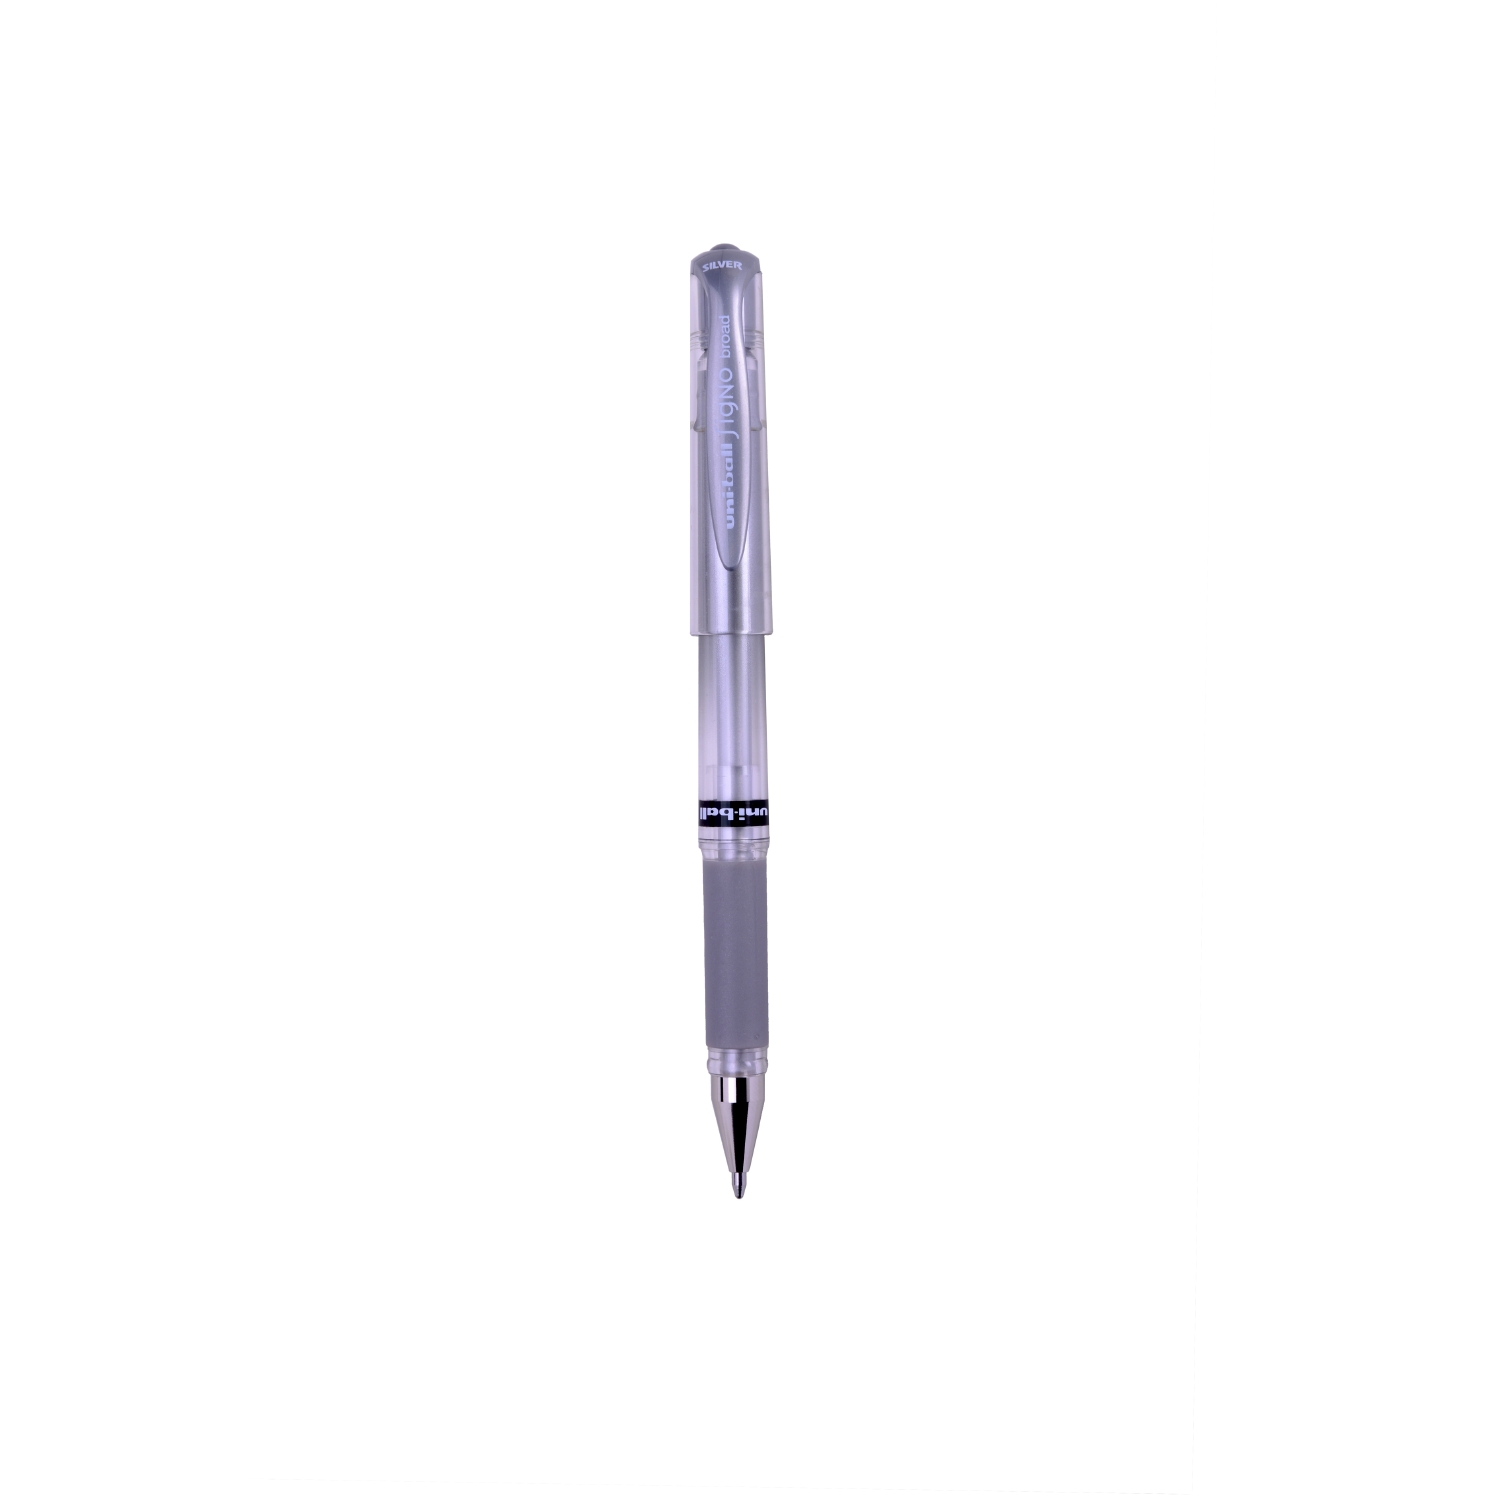 Uniball Signo Broad Pen UM-153 - Silver Image